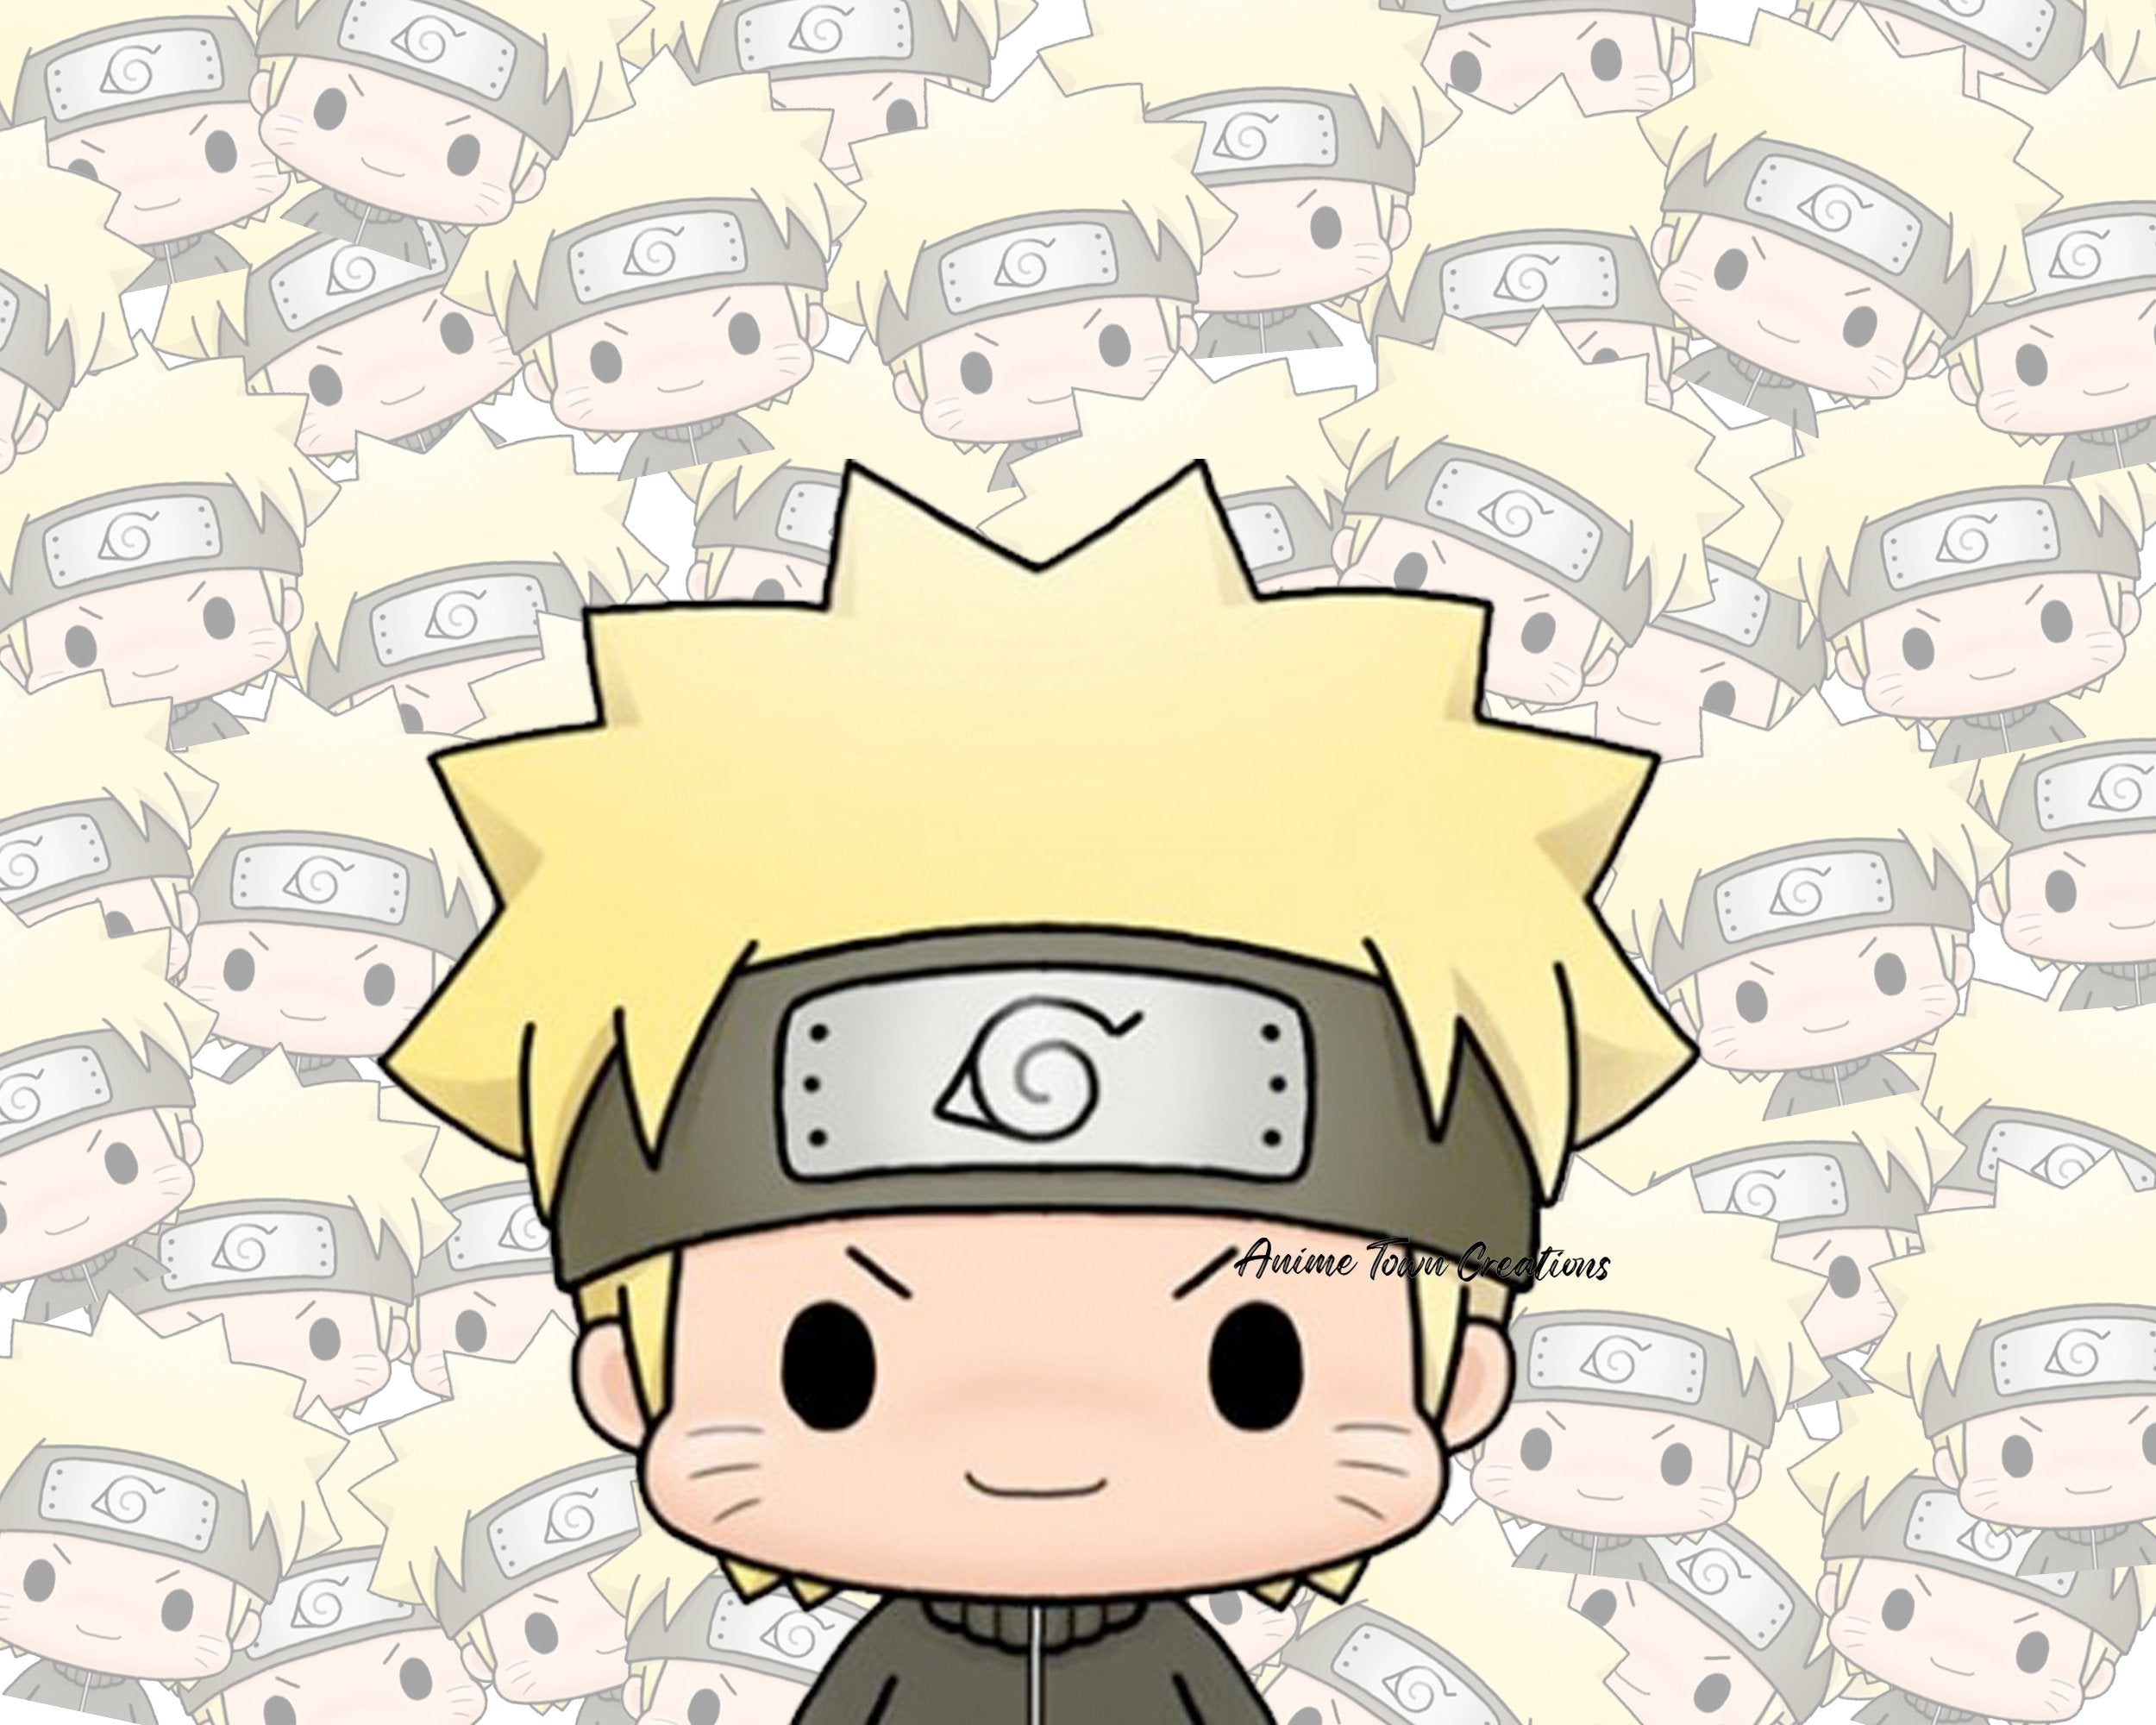 Naruto Peeker Sticker Sticker – Anime Town Creations